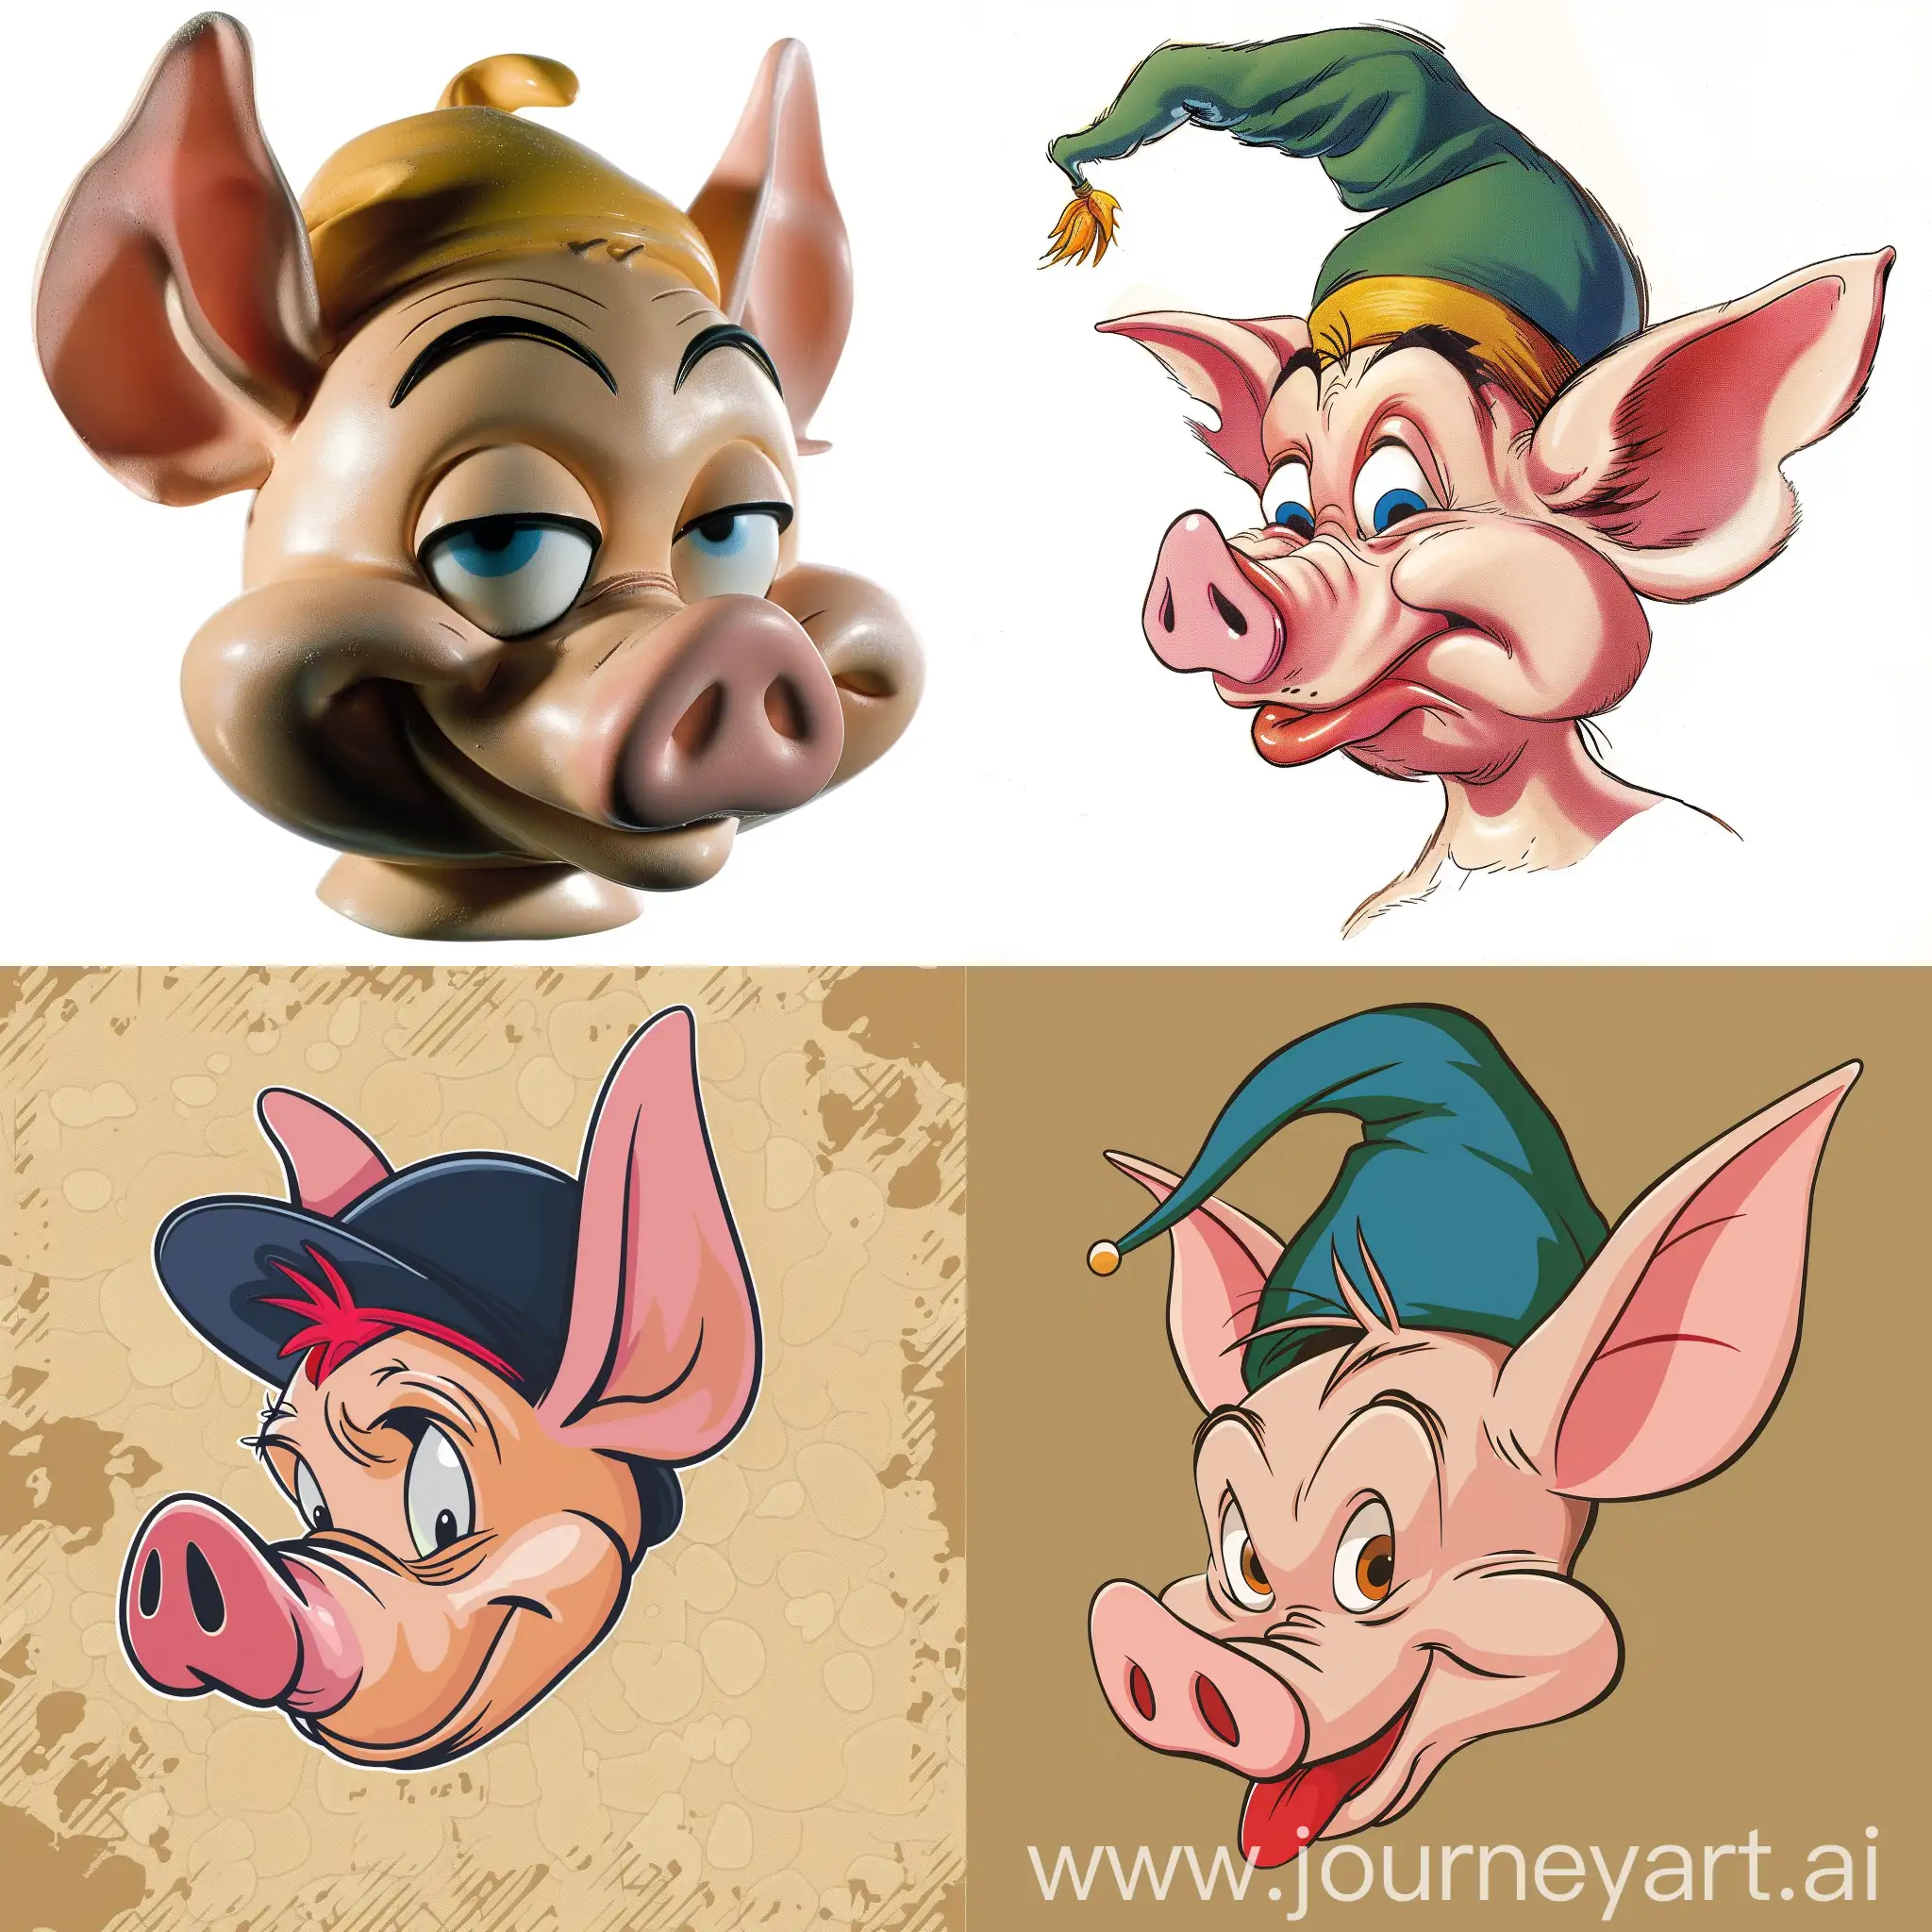 Porky-Pig-Jesting-Cap-Portrait-Art